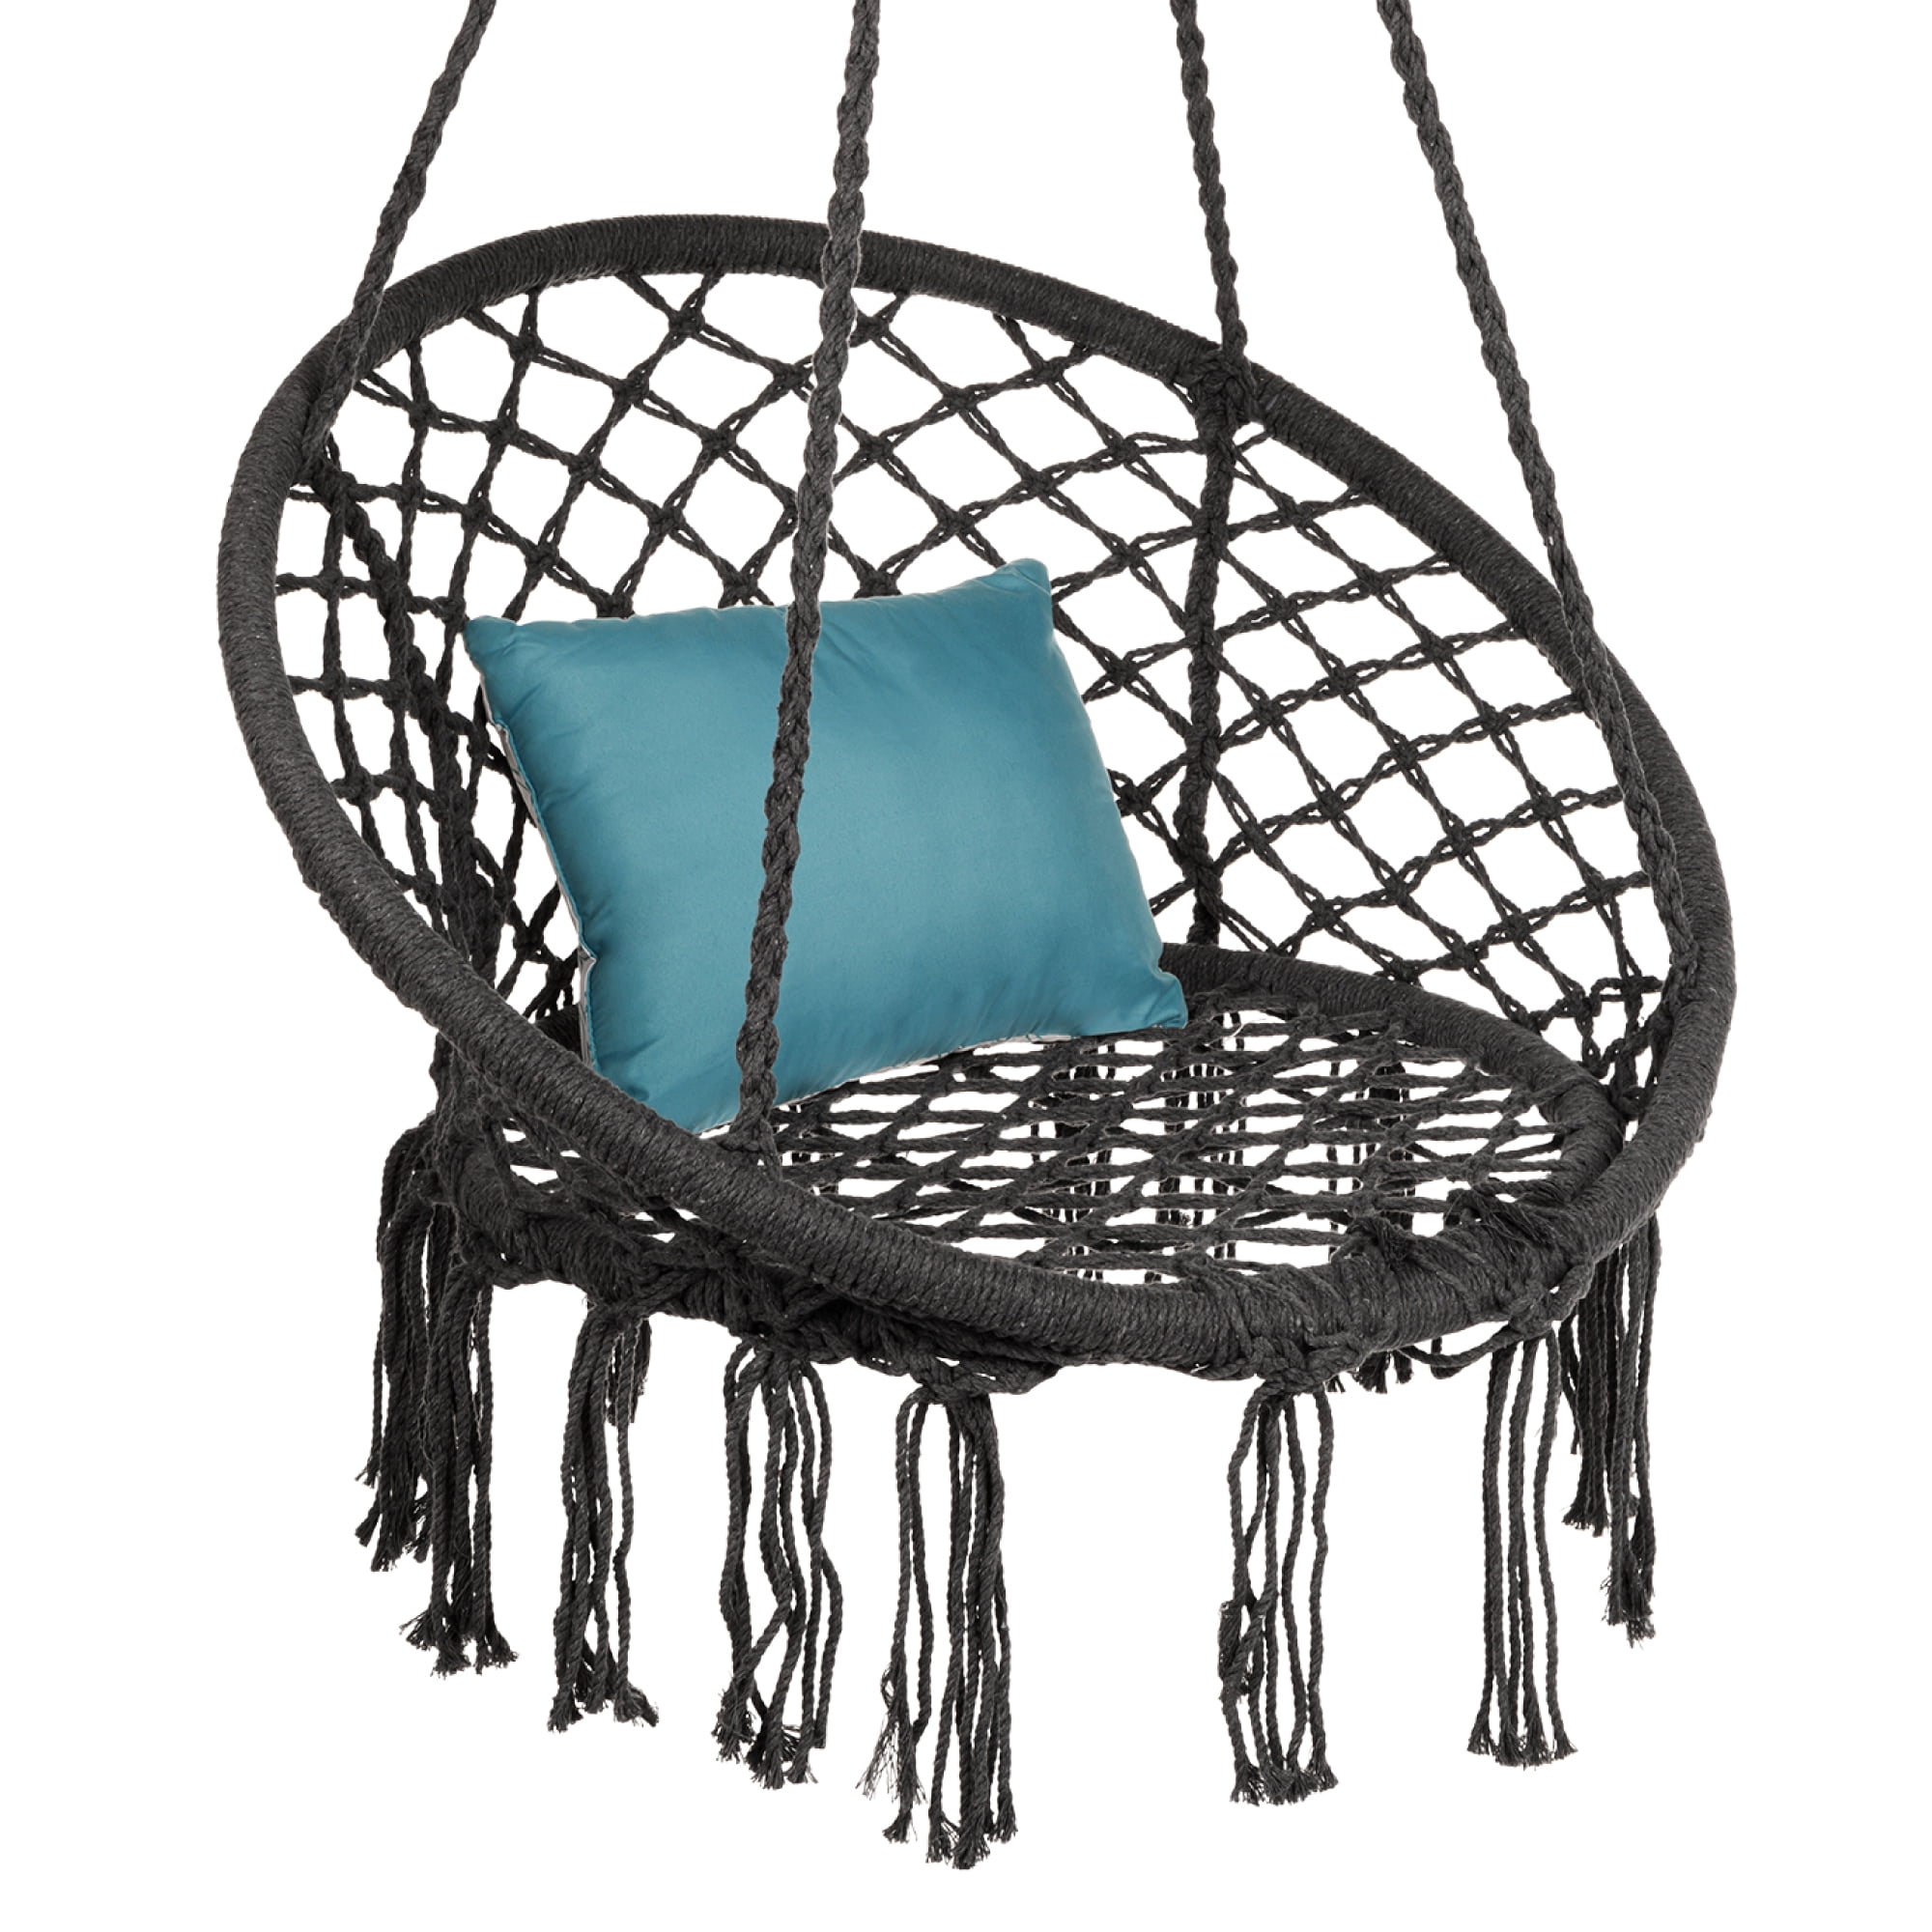 Handmade 100% cotton Hammock chair swing FREE SHIPPING 